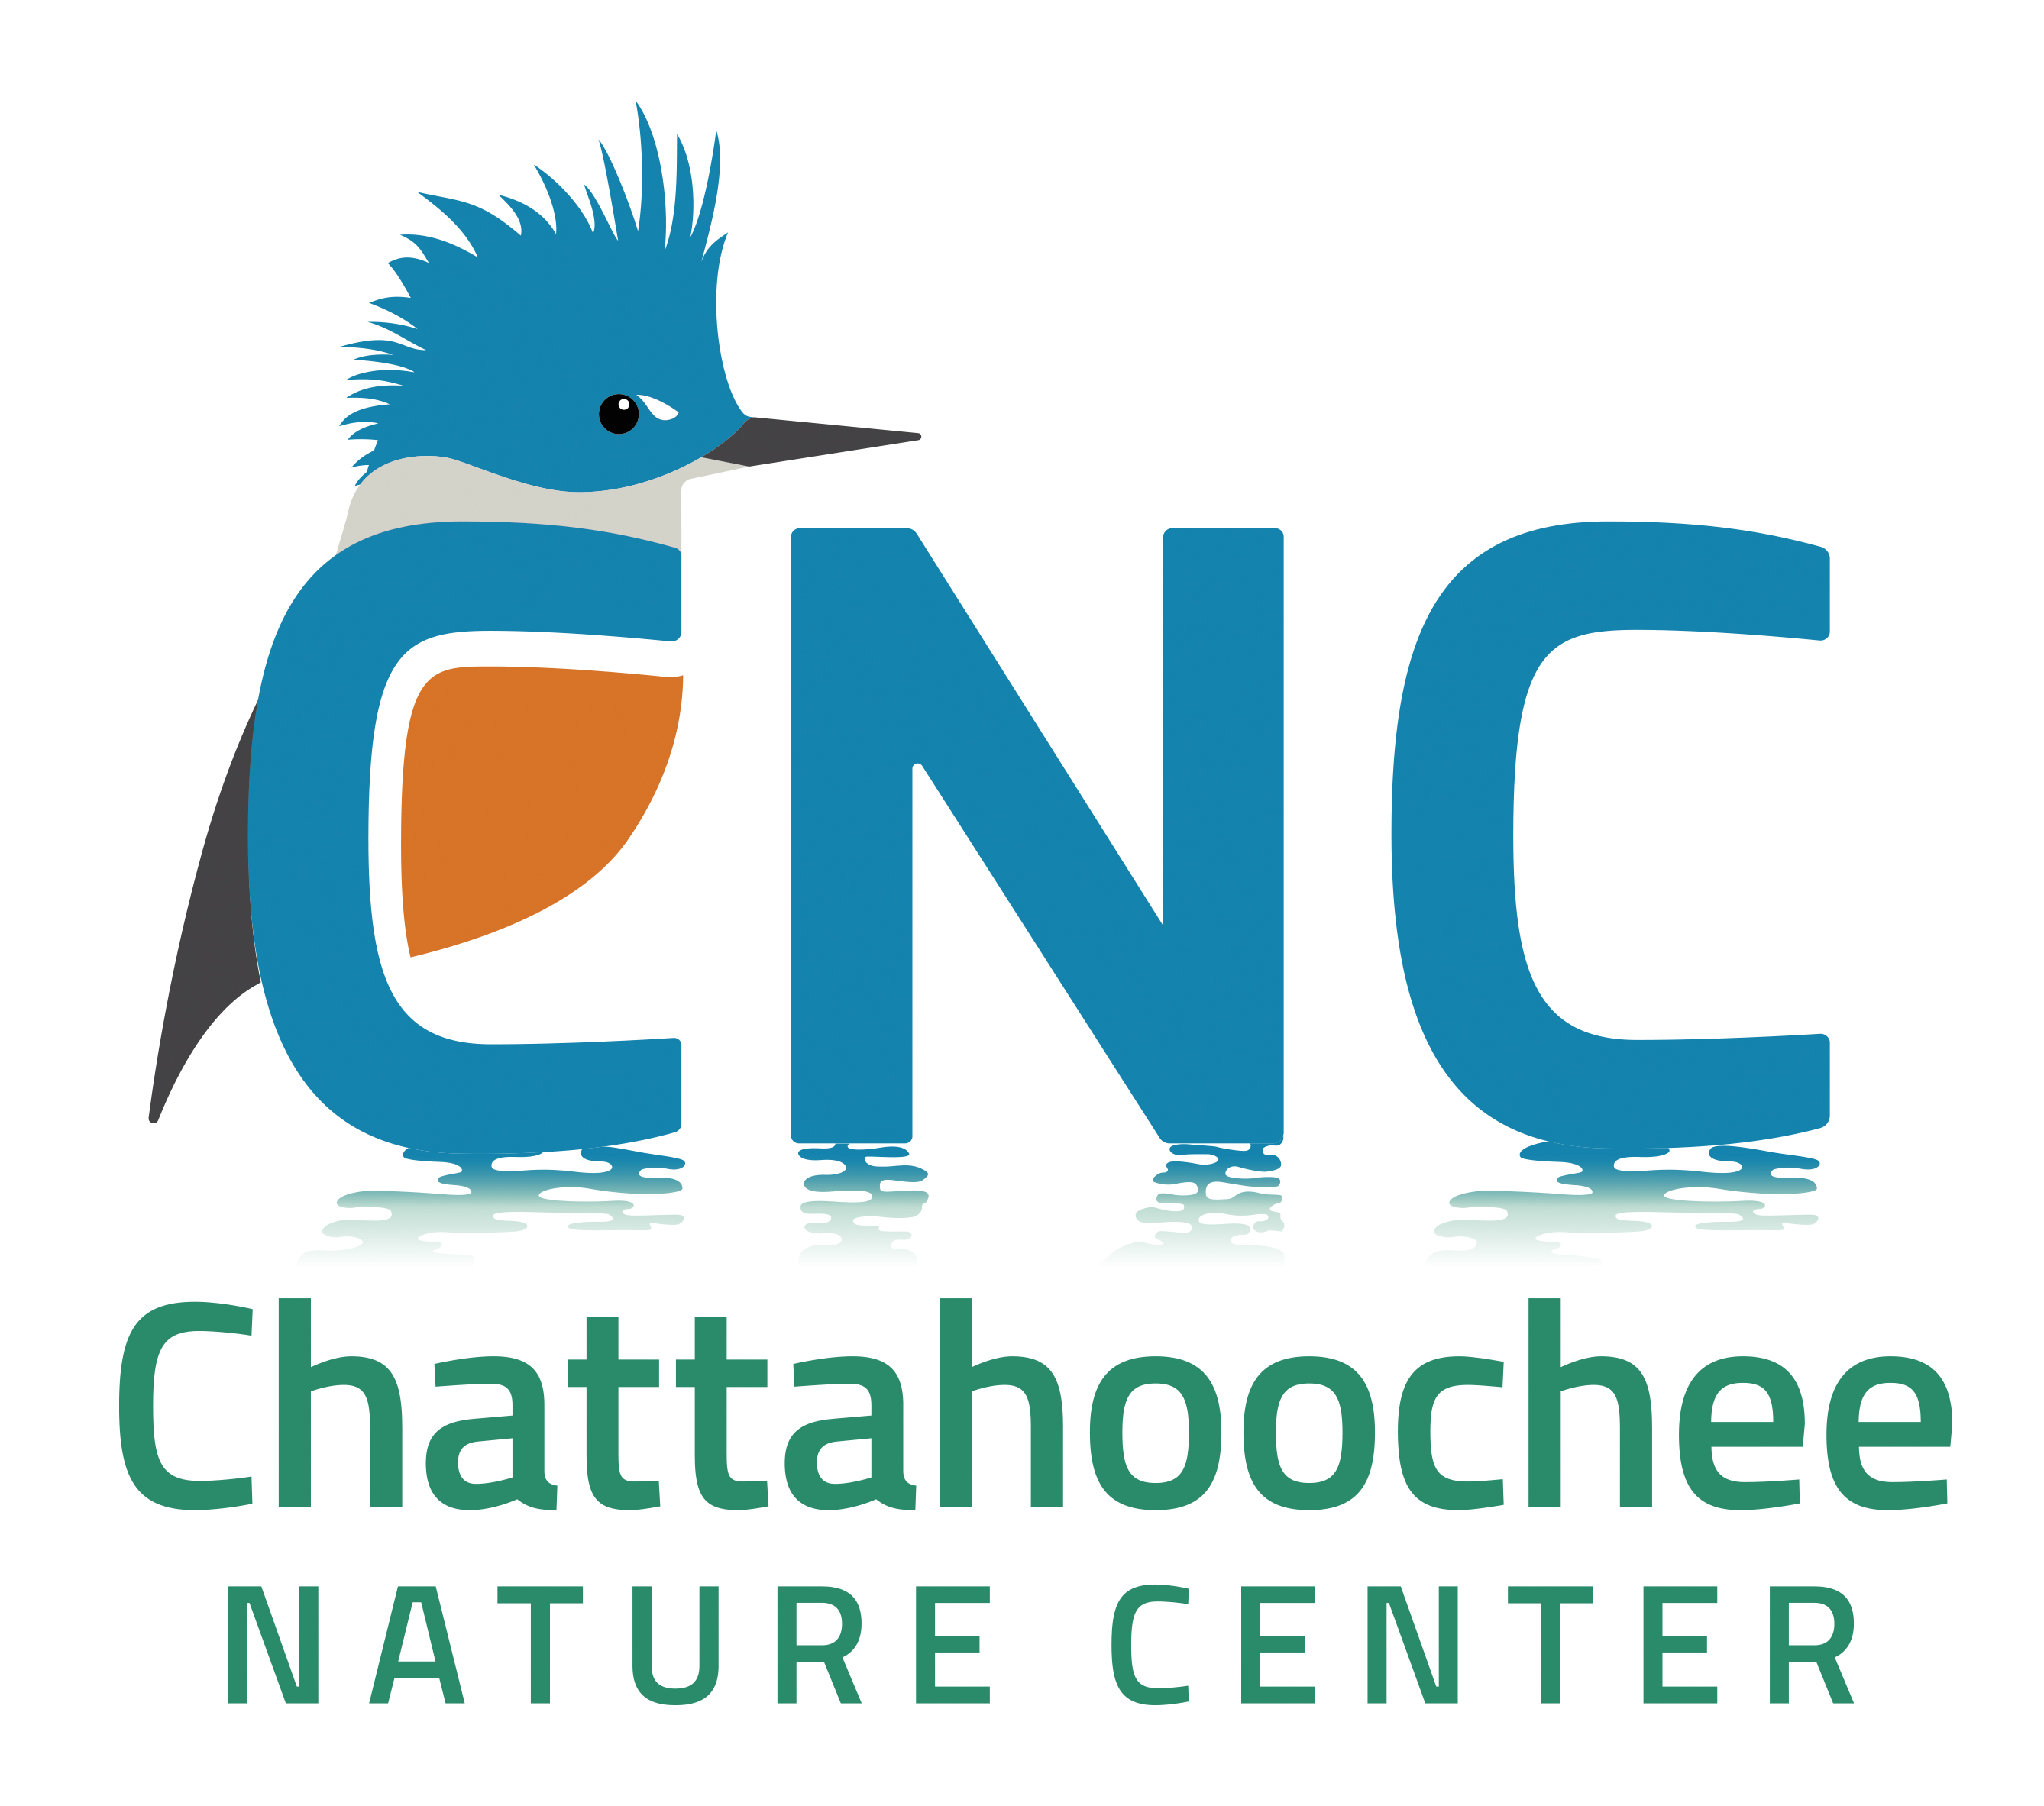 Chattahoochee Nature Center logo